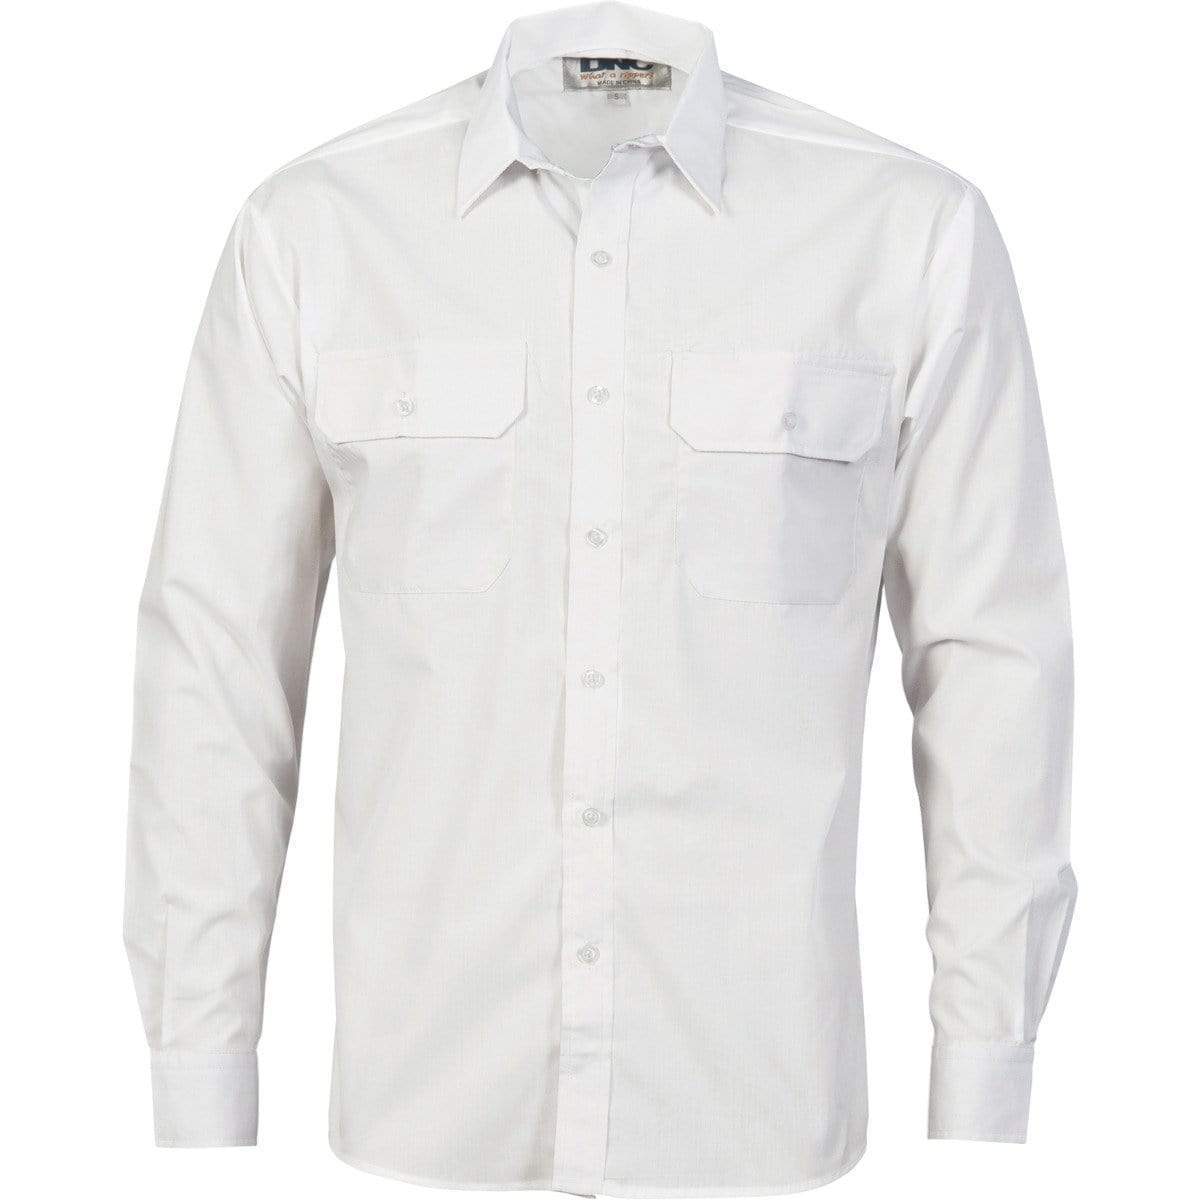 Dnc Workwear Polyester Cotton Long Sleeve Work Shirt - 3212 Work Wear DNC Workwear White XS 